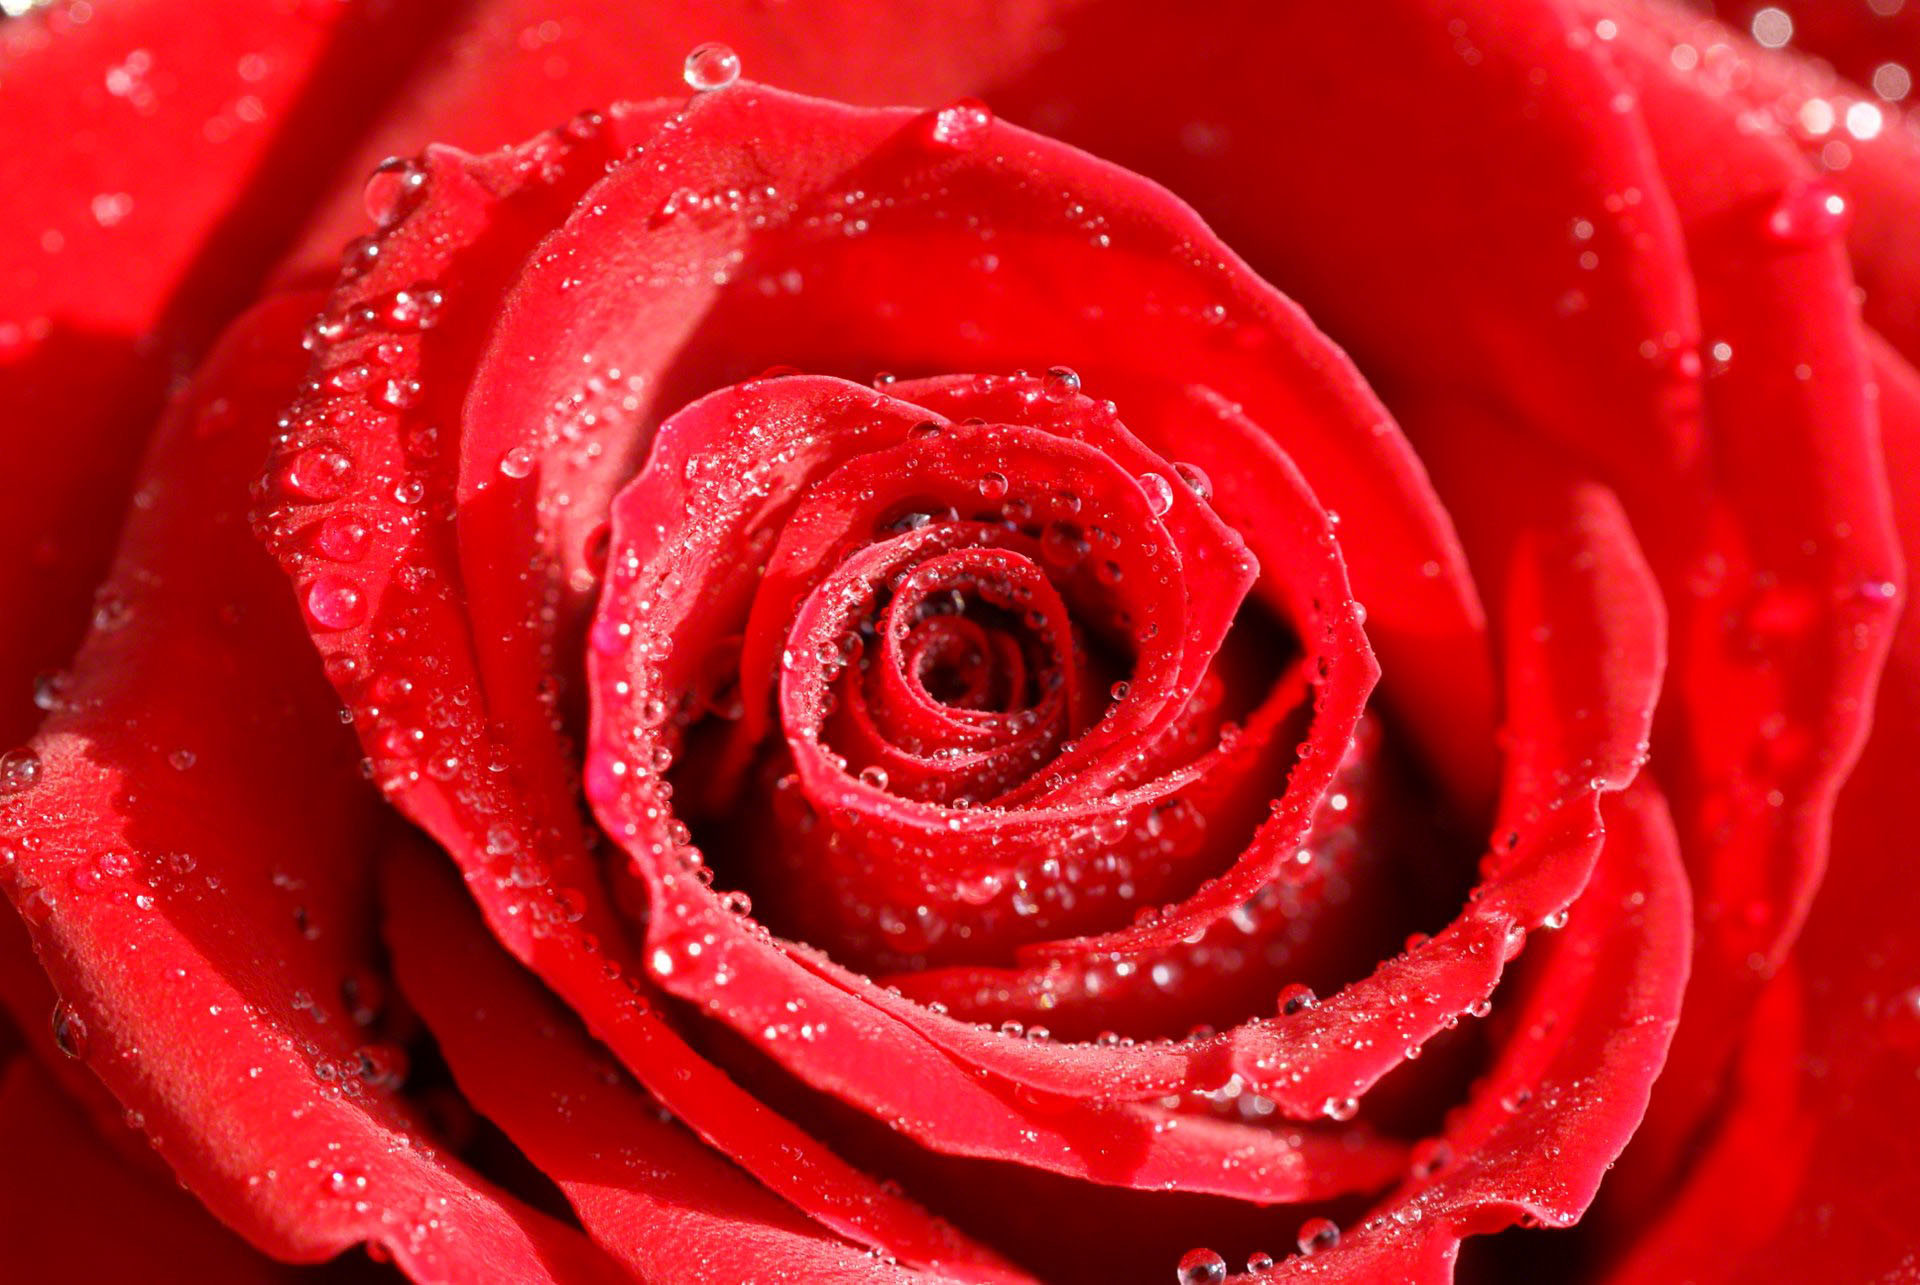 Rose Flowers Wallpaper